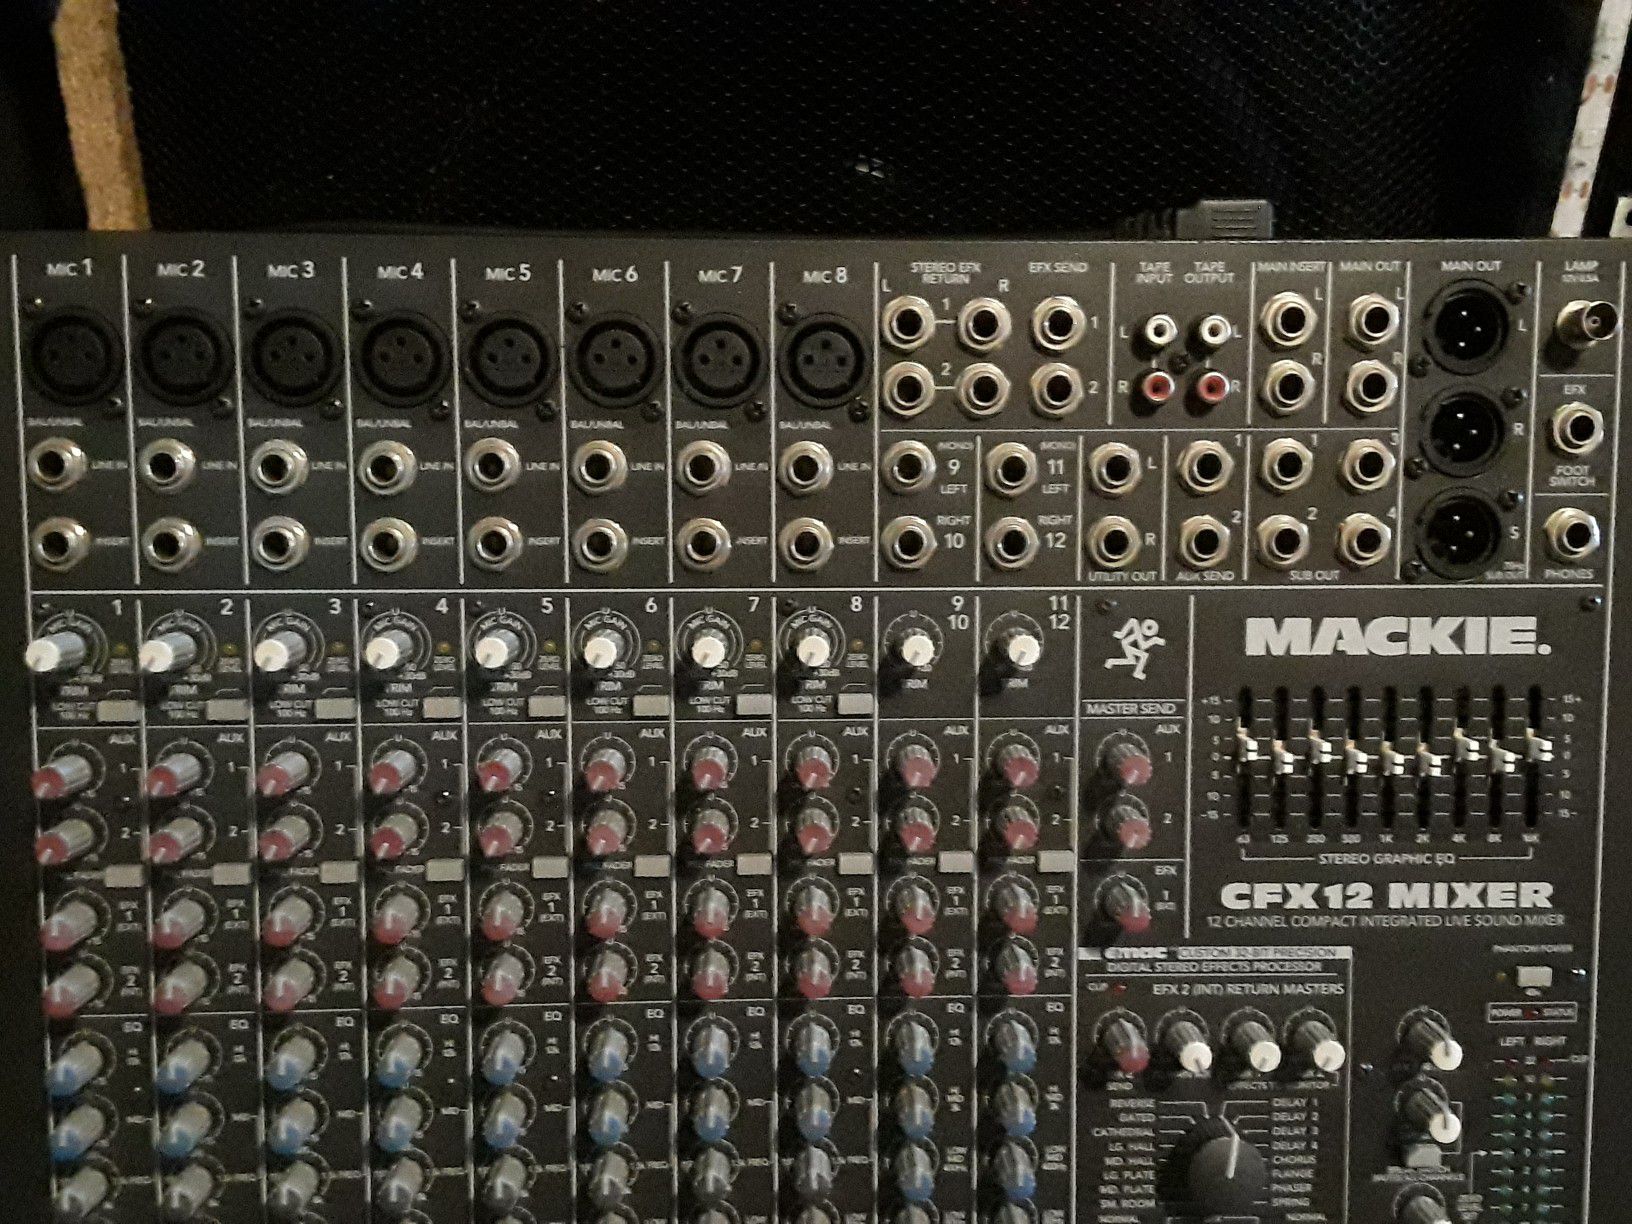 Mackie mixing board